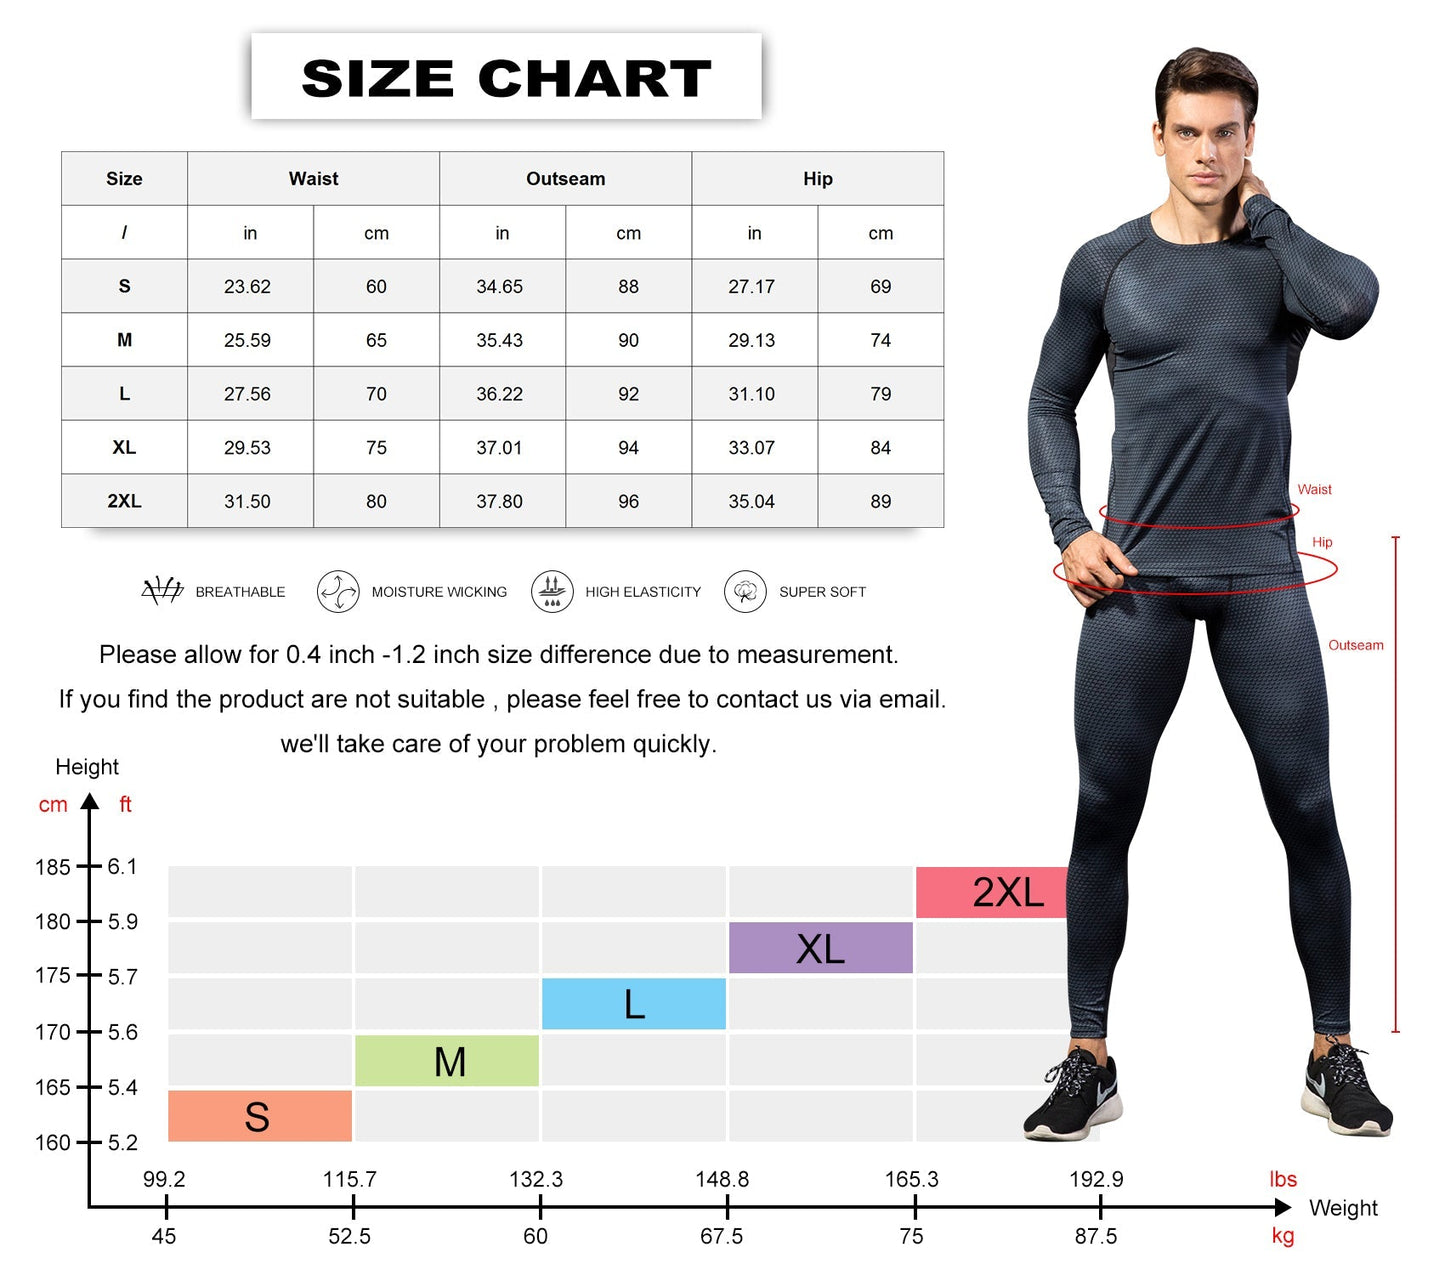 Mens Compression Pants 3D Snake Skin Printed Running Tights Quick Dry Performance Workout Leggings Yoga Gym Base Layer LANBAOSI